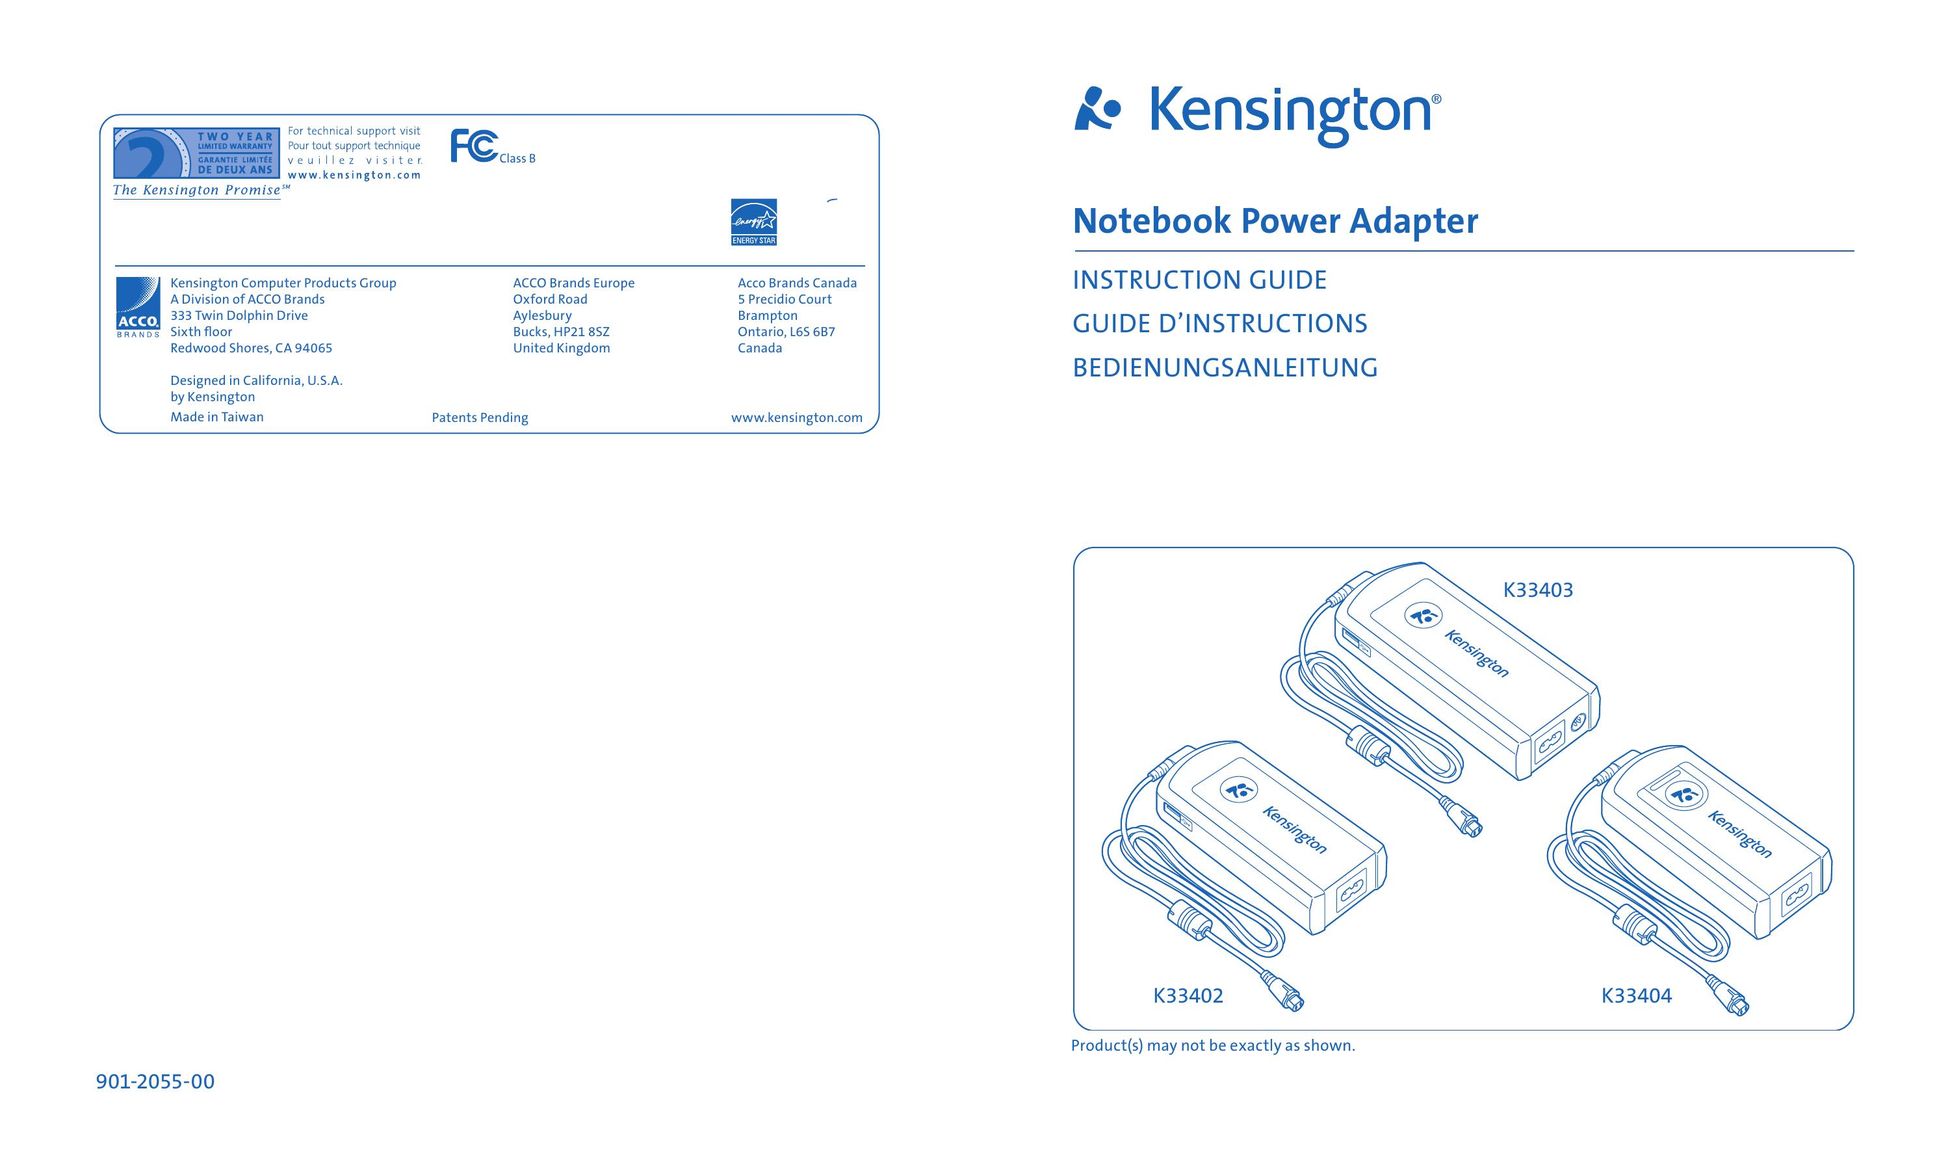 Kensington Notebook Power Adapter Network Card User Manual